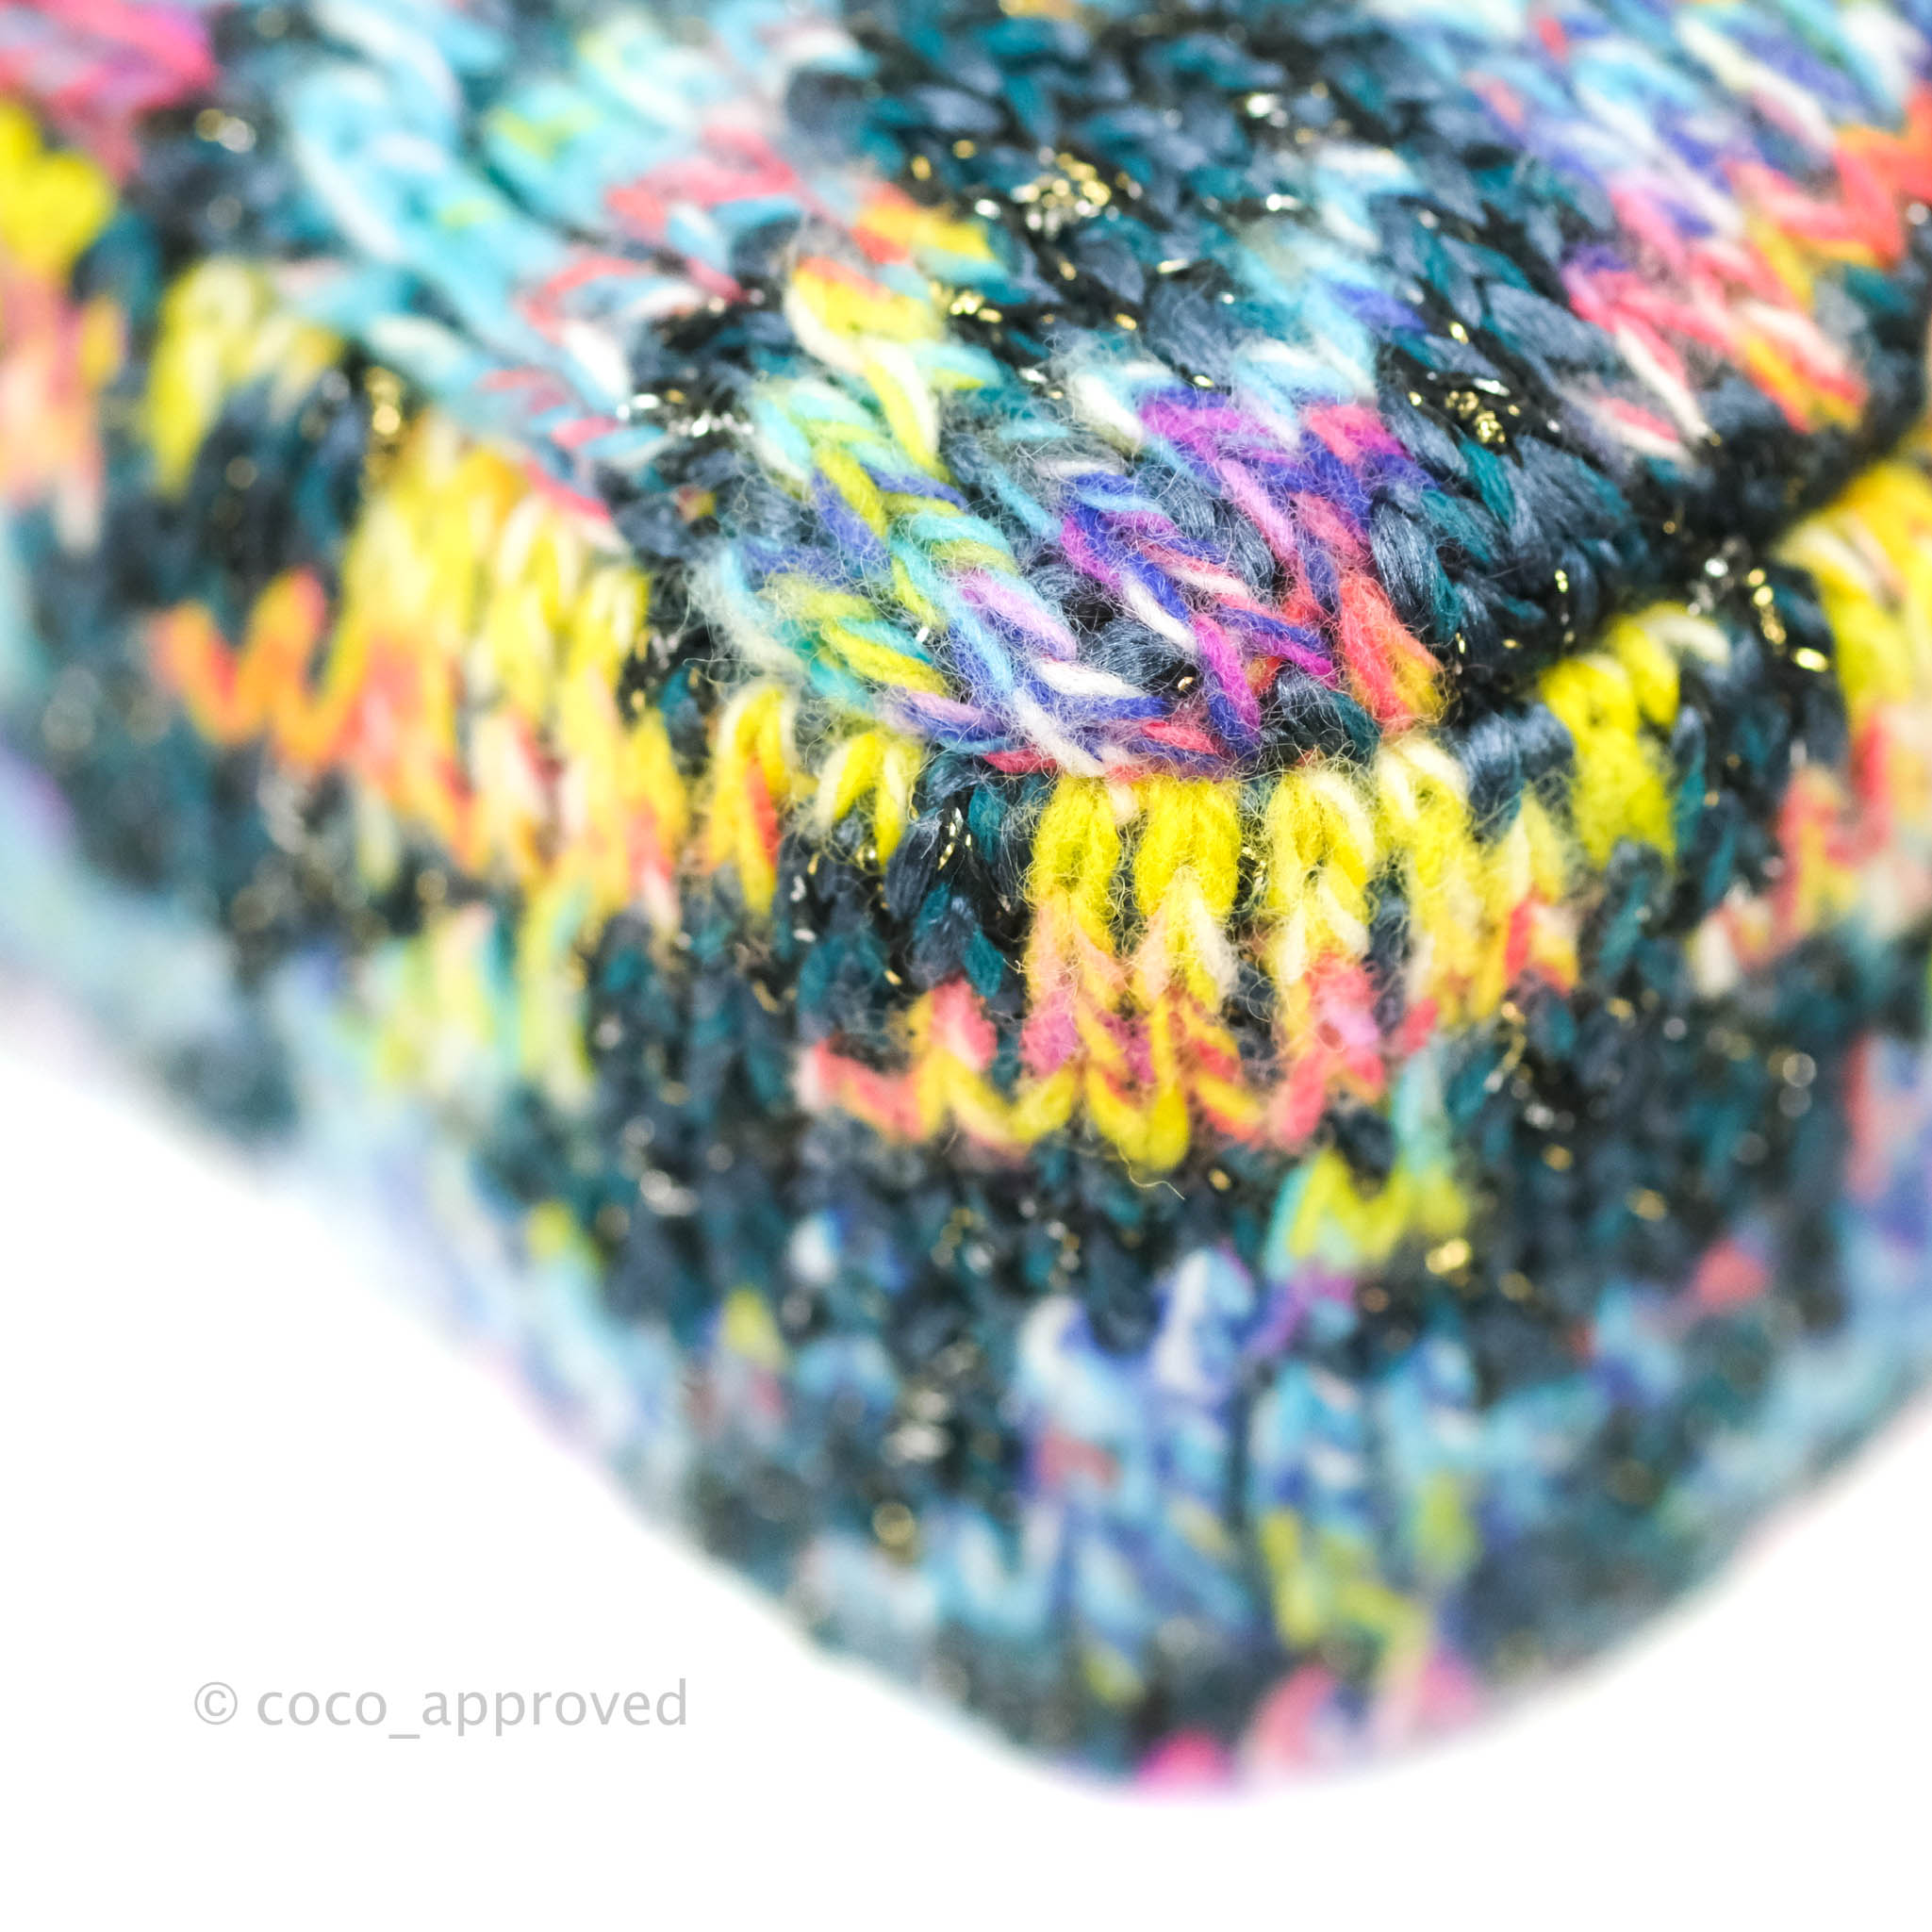 Chanel Mini Rectangular Rainbow Houndstooth Wool Tweed Flap Gold